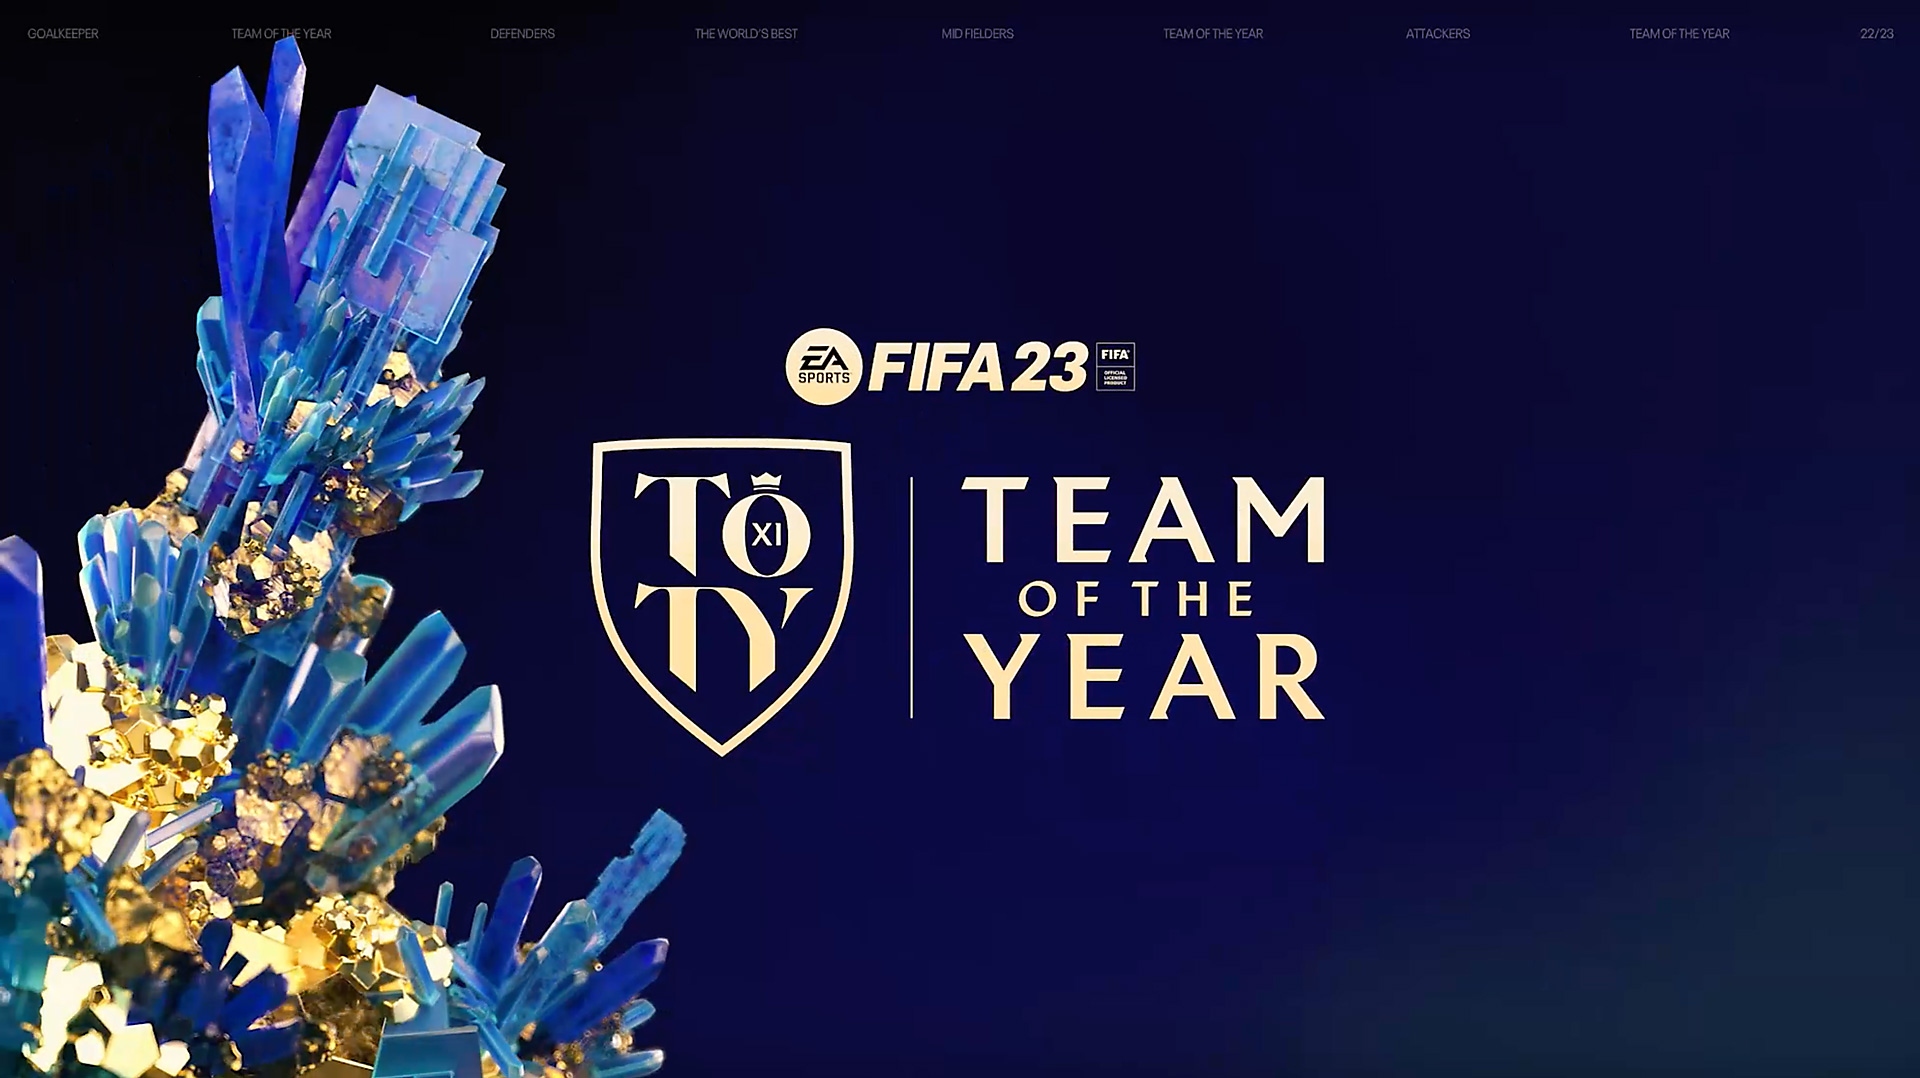 FIFA 23 – Årets lag (TOTY) i FUT